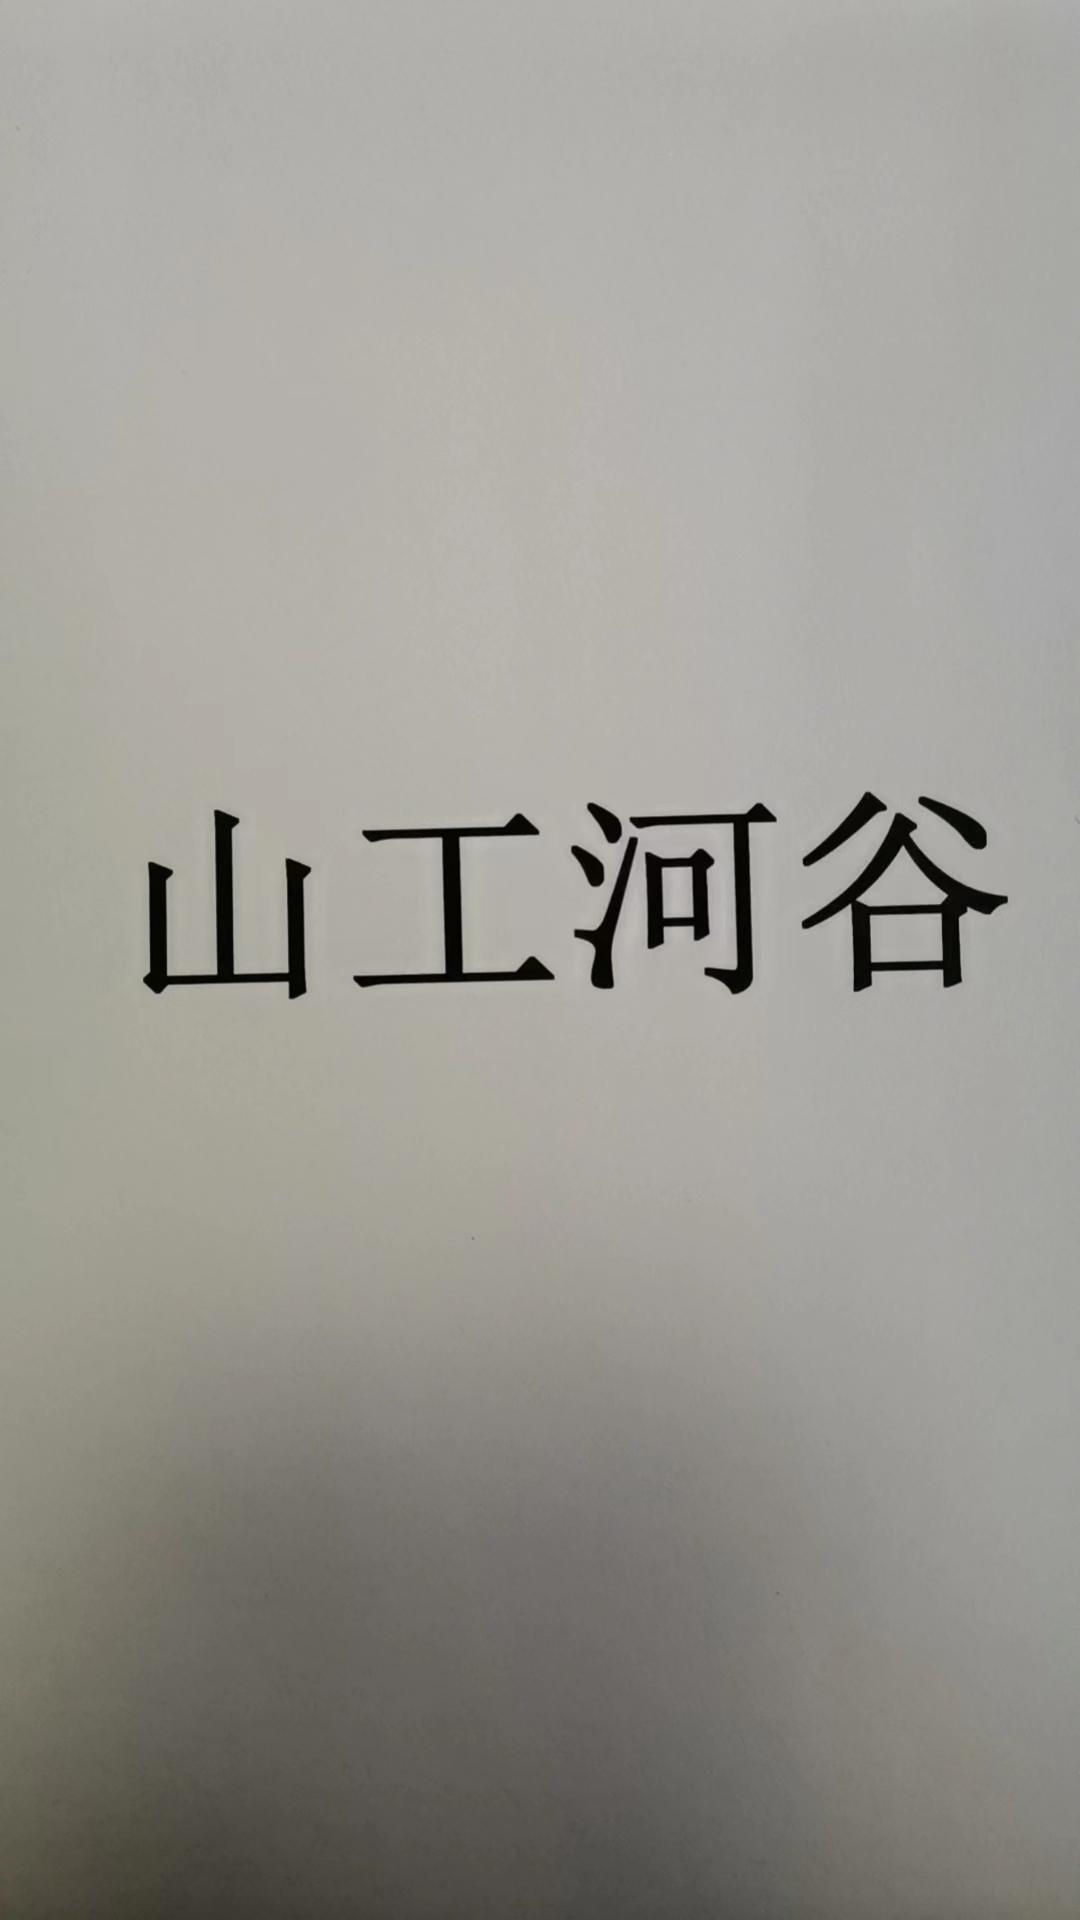 山工河谷logo